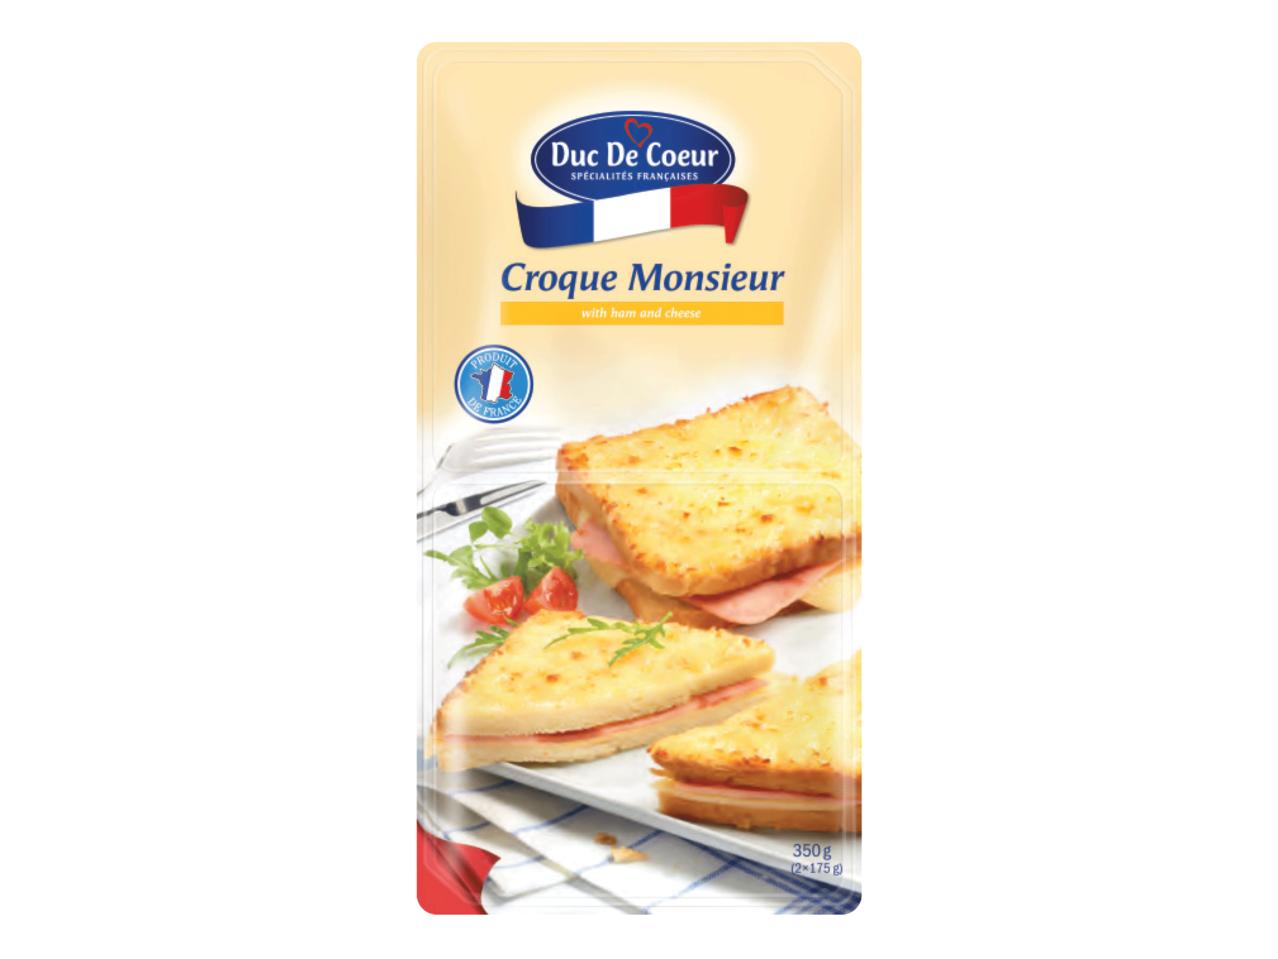 DUC DE COEUR French Style Ham & Cheese Sandwich